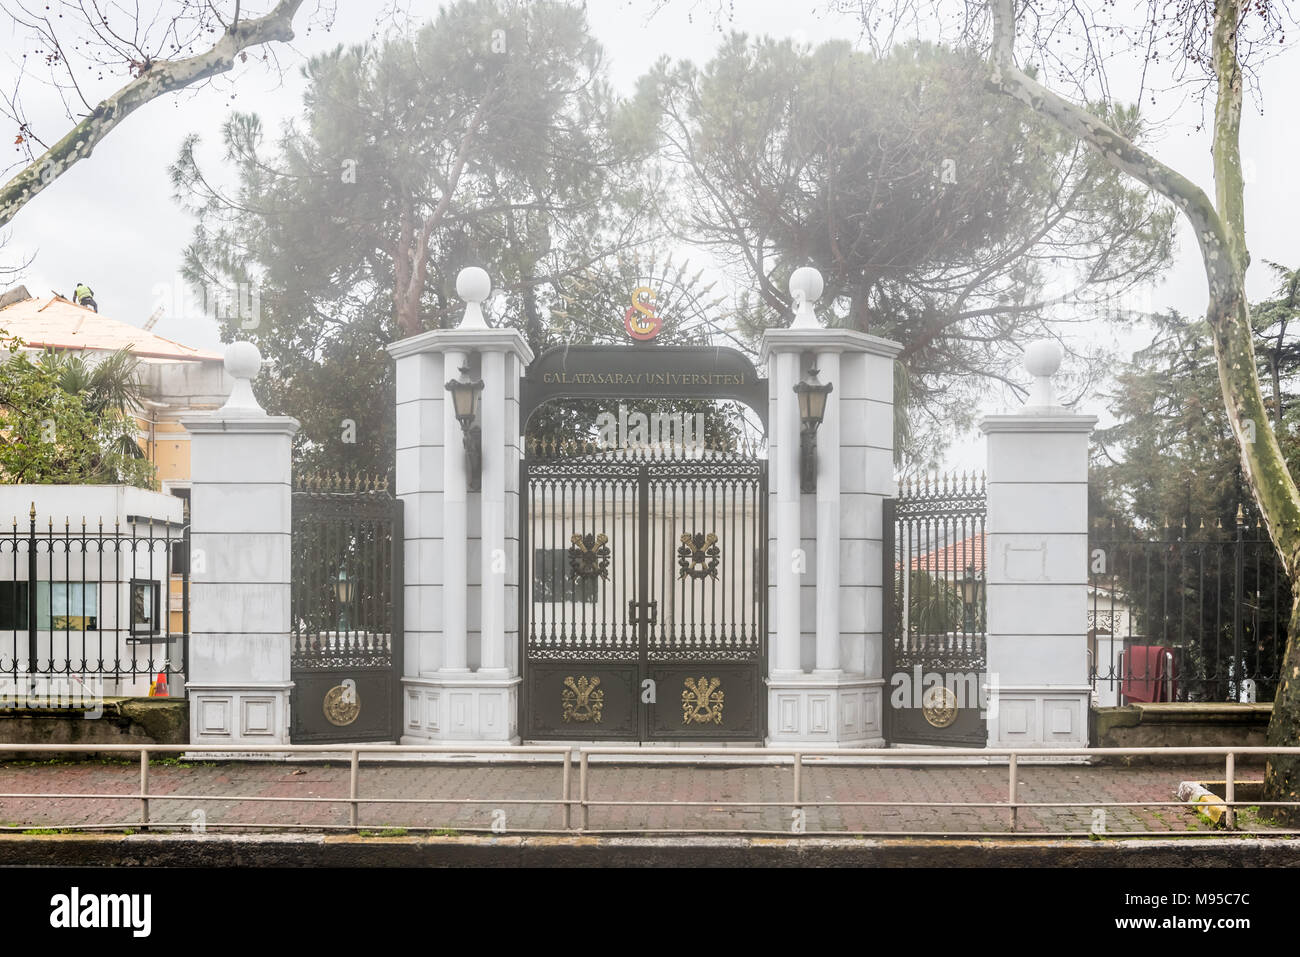 Gate of old ancient Galatasaray University in Besiktas,Istanbul,Turkey.03 January 2018 Stock Photo